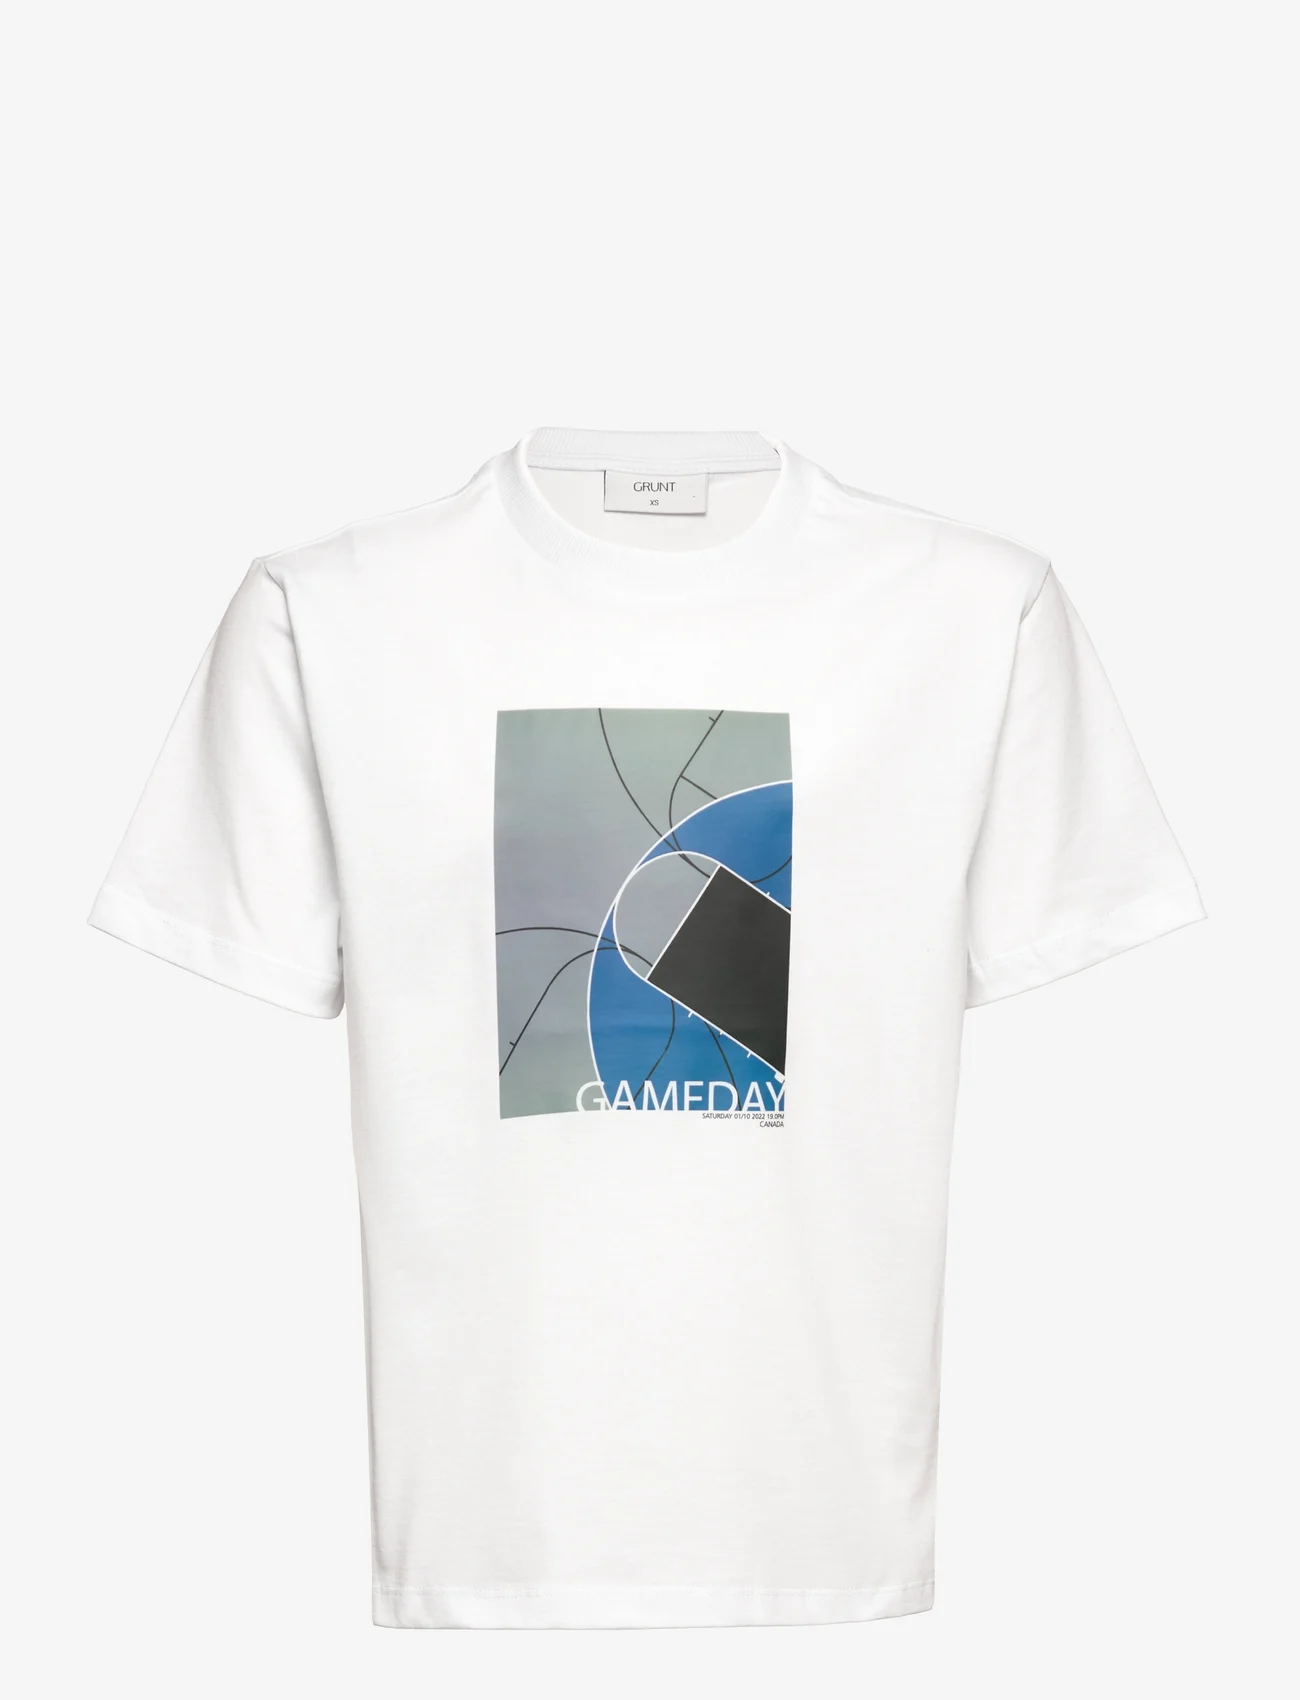 Grunt - Boaz Tee - kortärmade t-shirts - white - 0